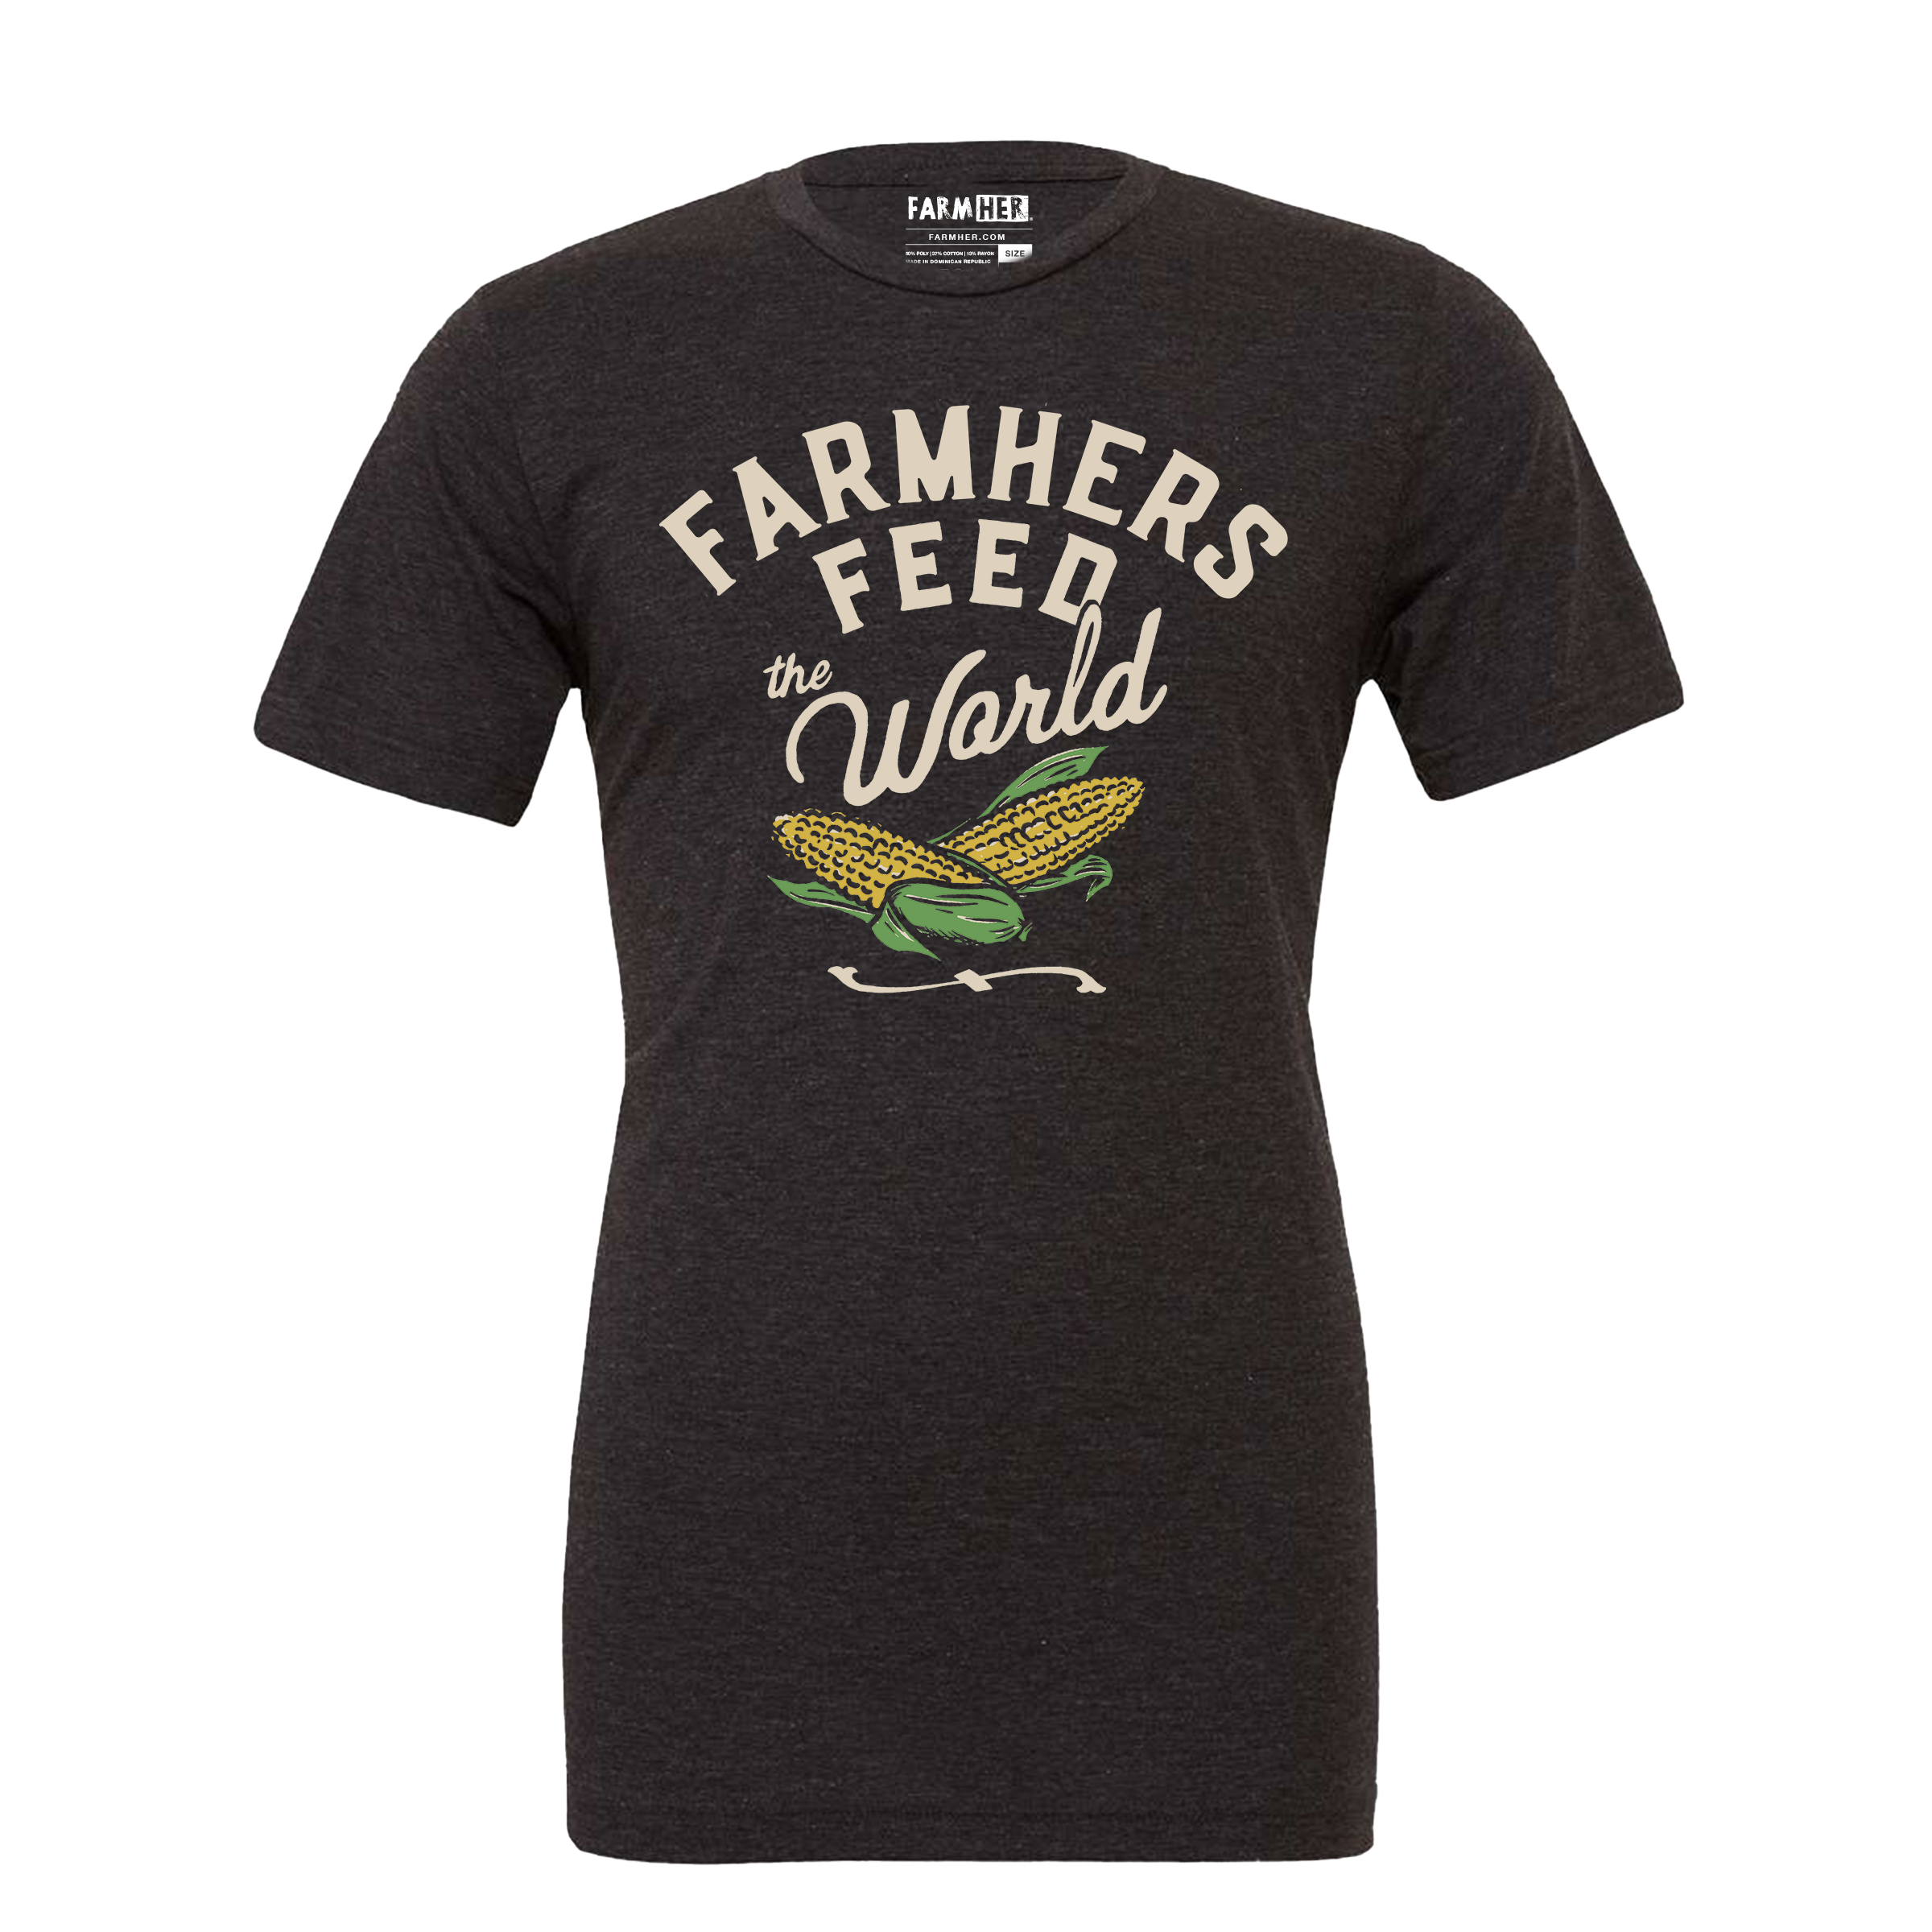 FarmHers Feed The World T-Shirt